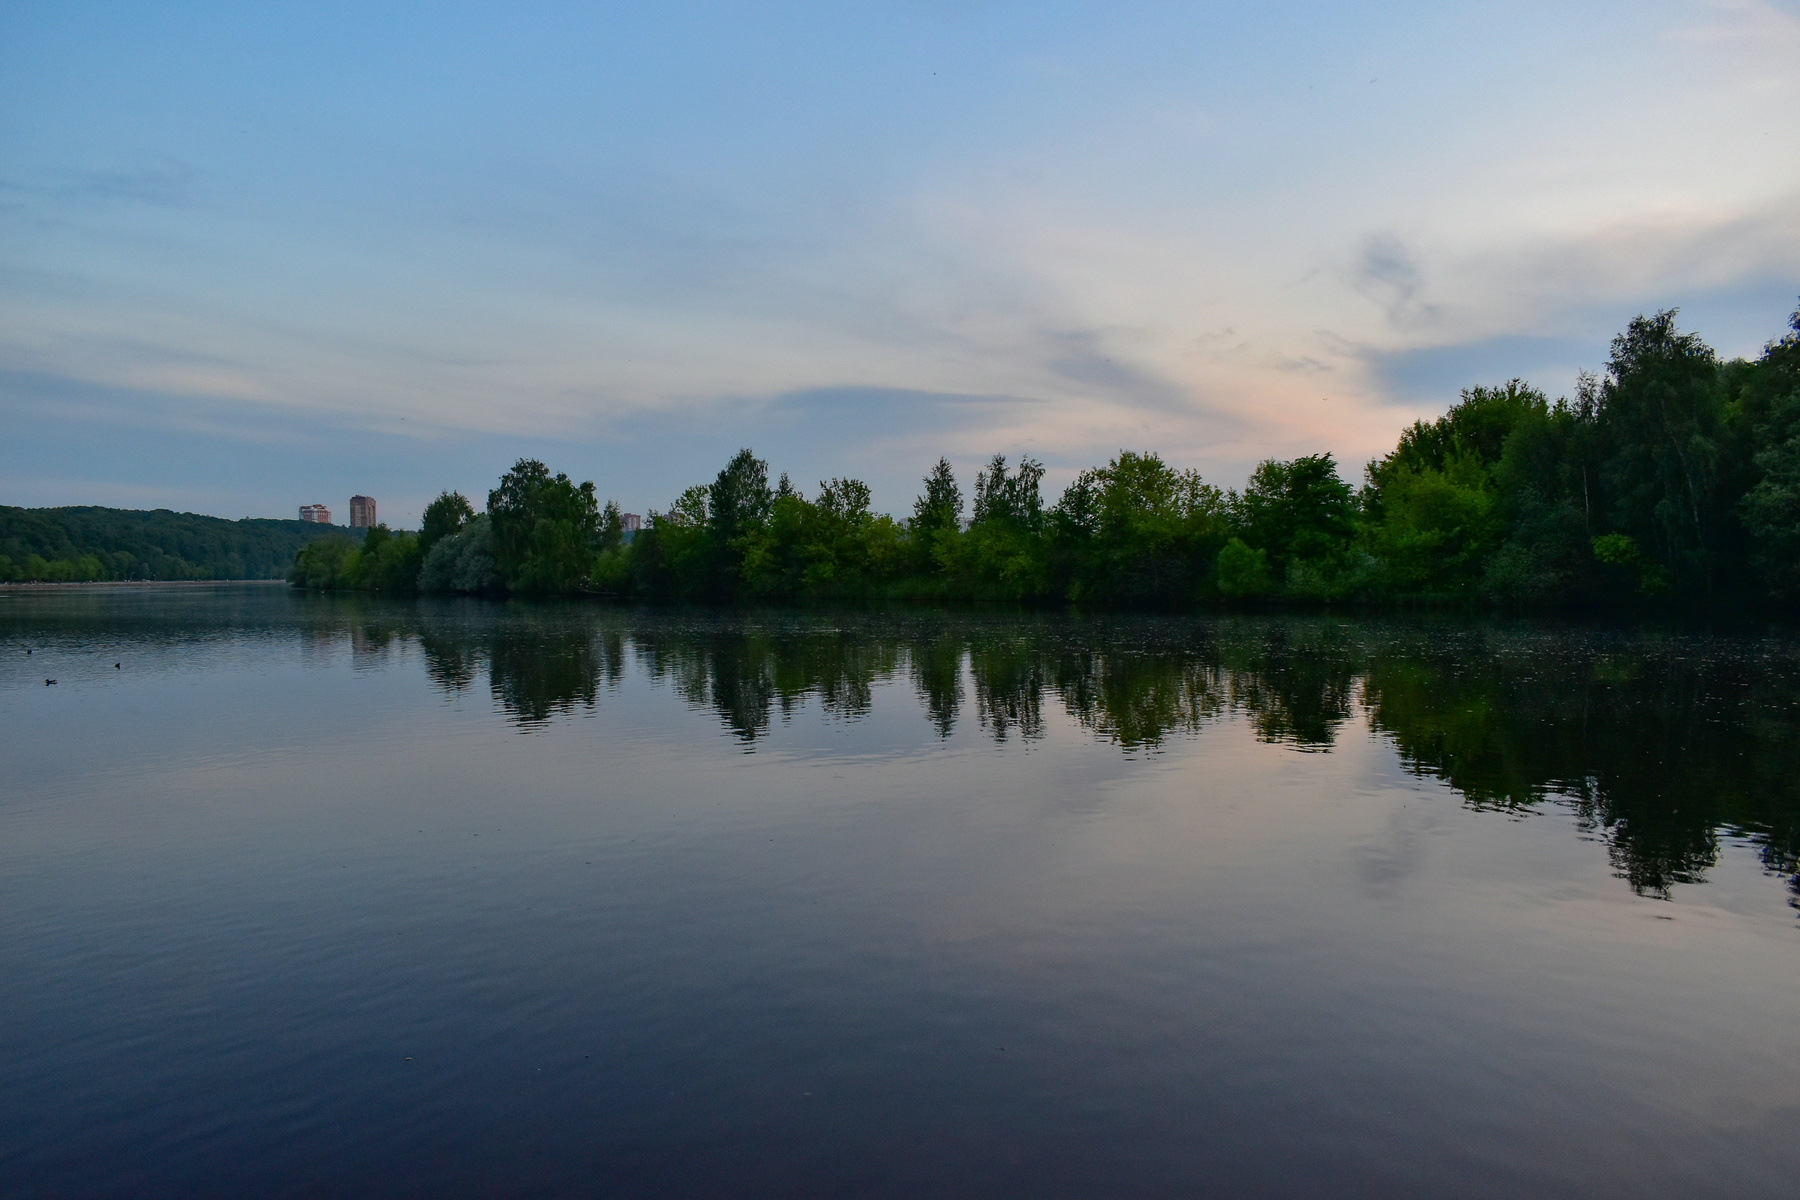 Звуковая волна заката Москва-река Филевский парк закат пейзаж